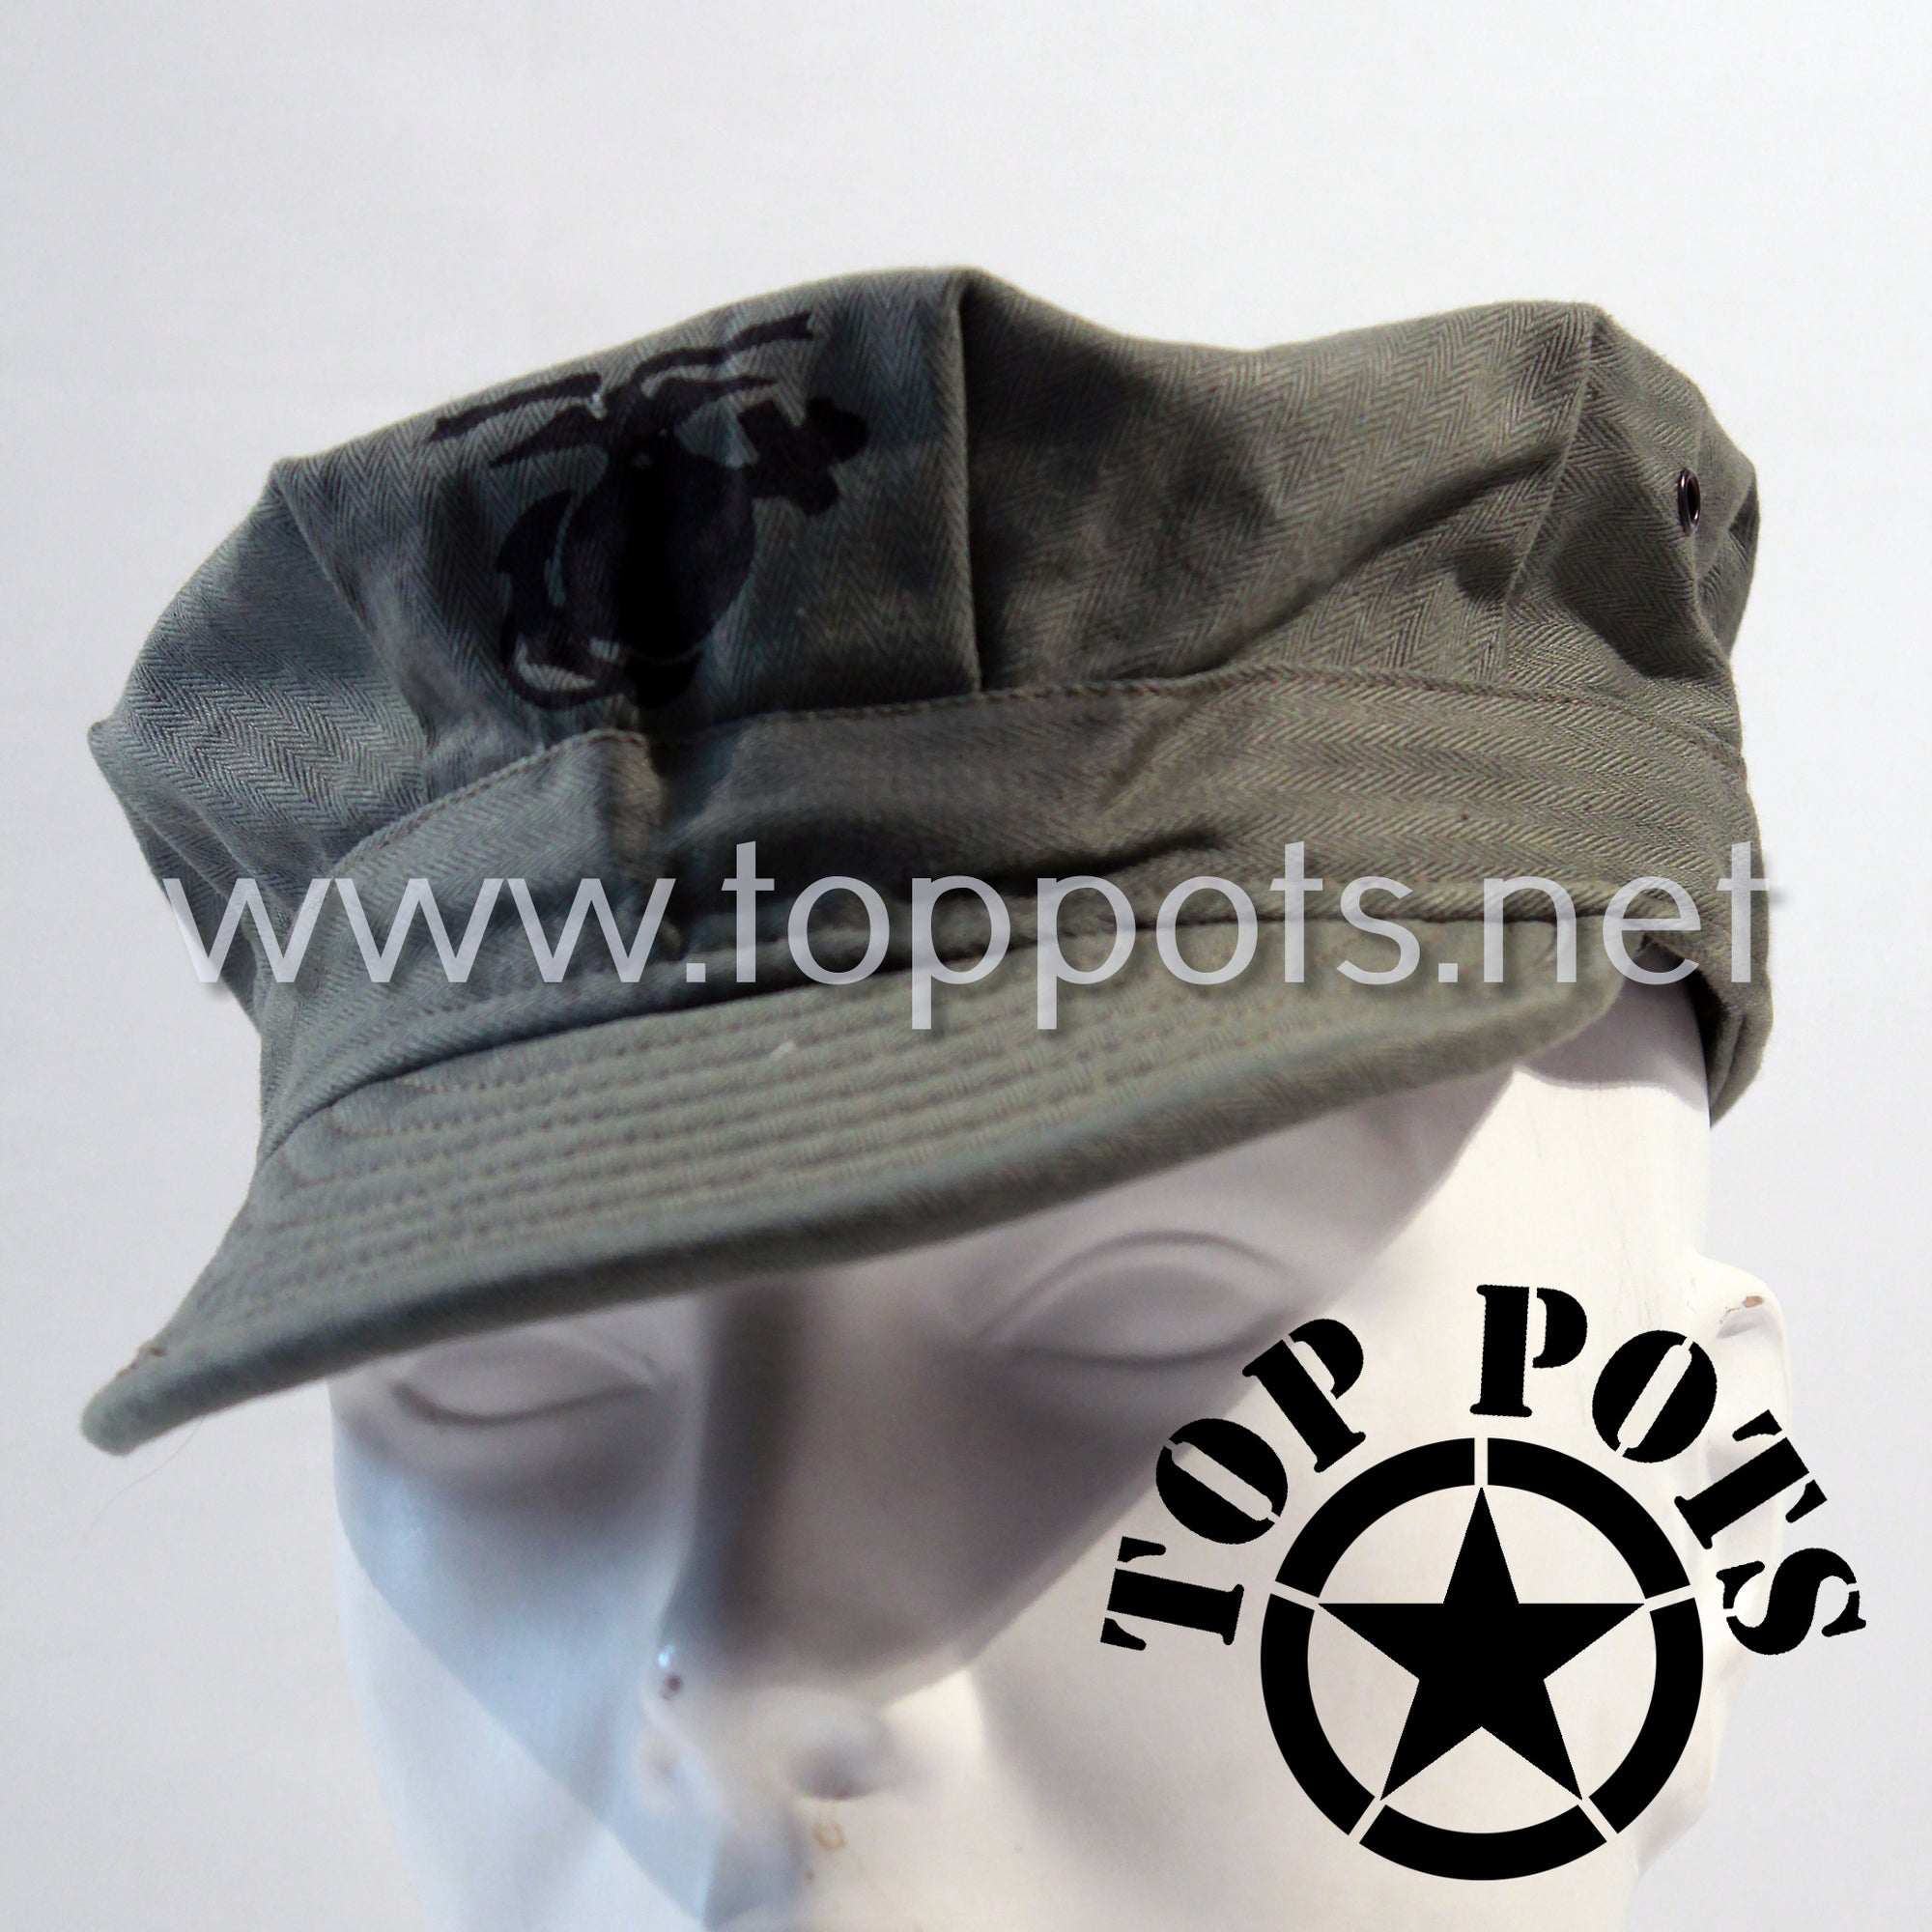 WWII USMC Reproduction Cotton HBT Uniform Herring Bone Twill Olive Drab Field Utility Fatigue Cap